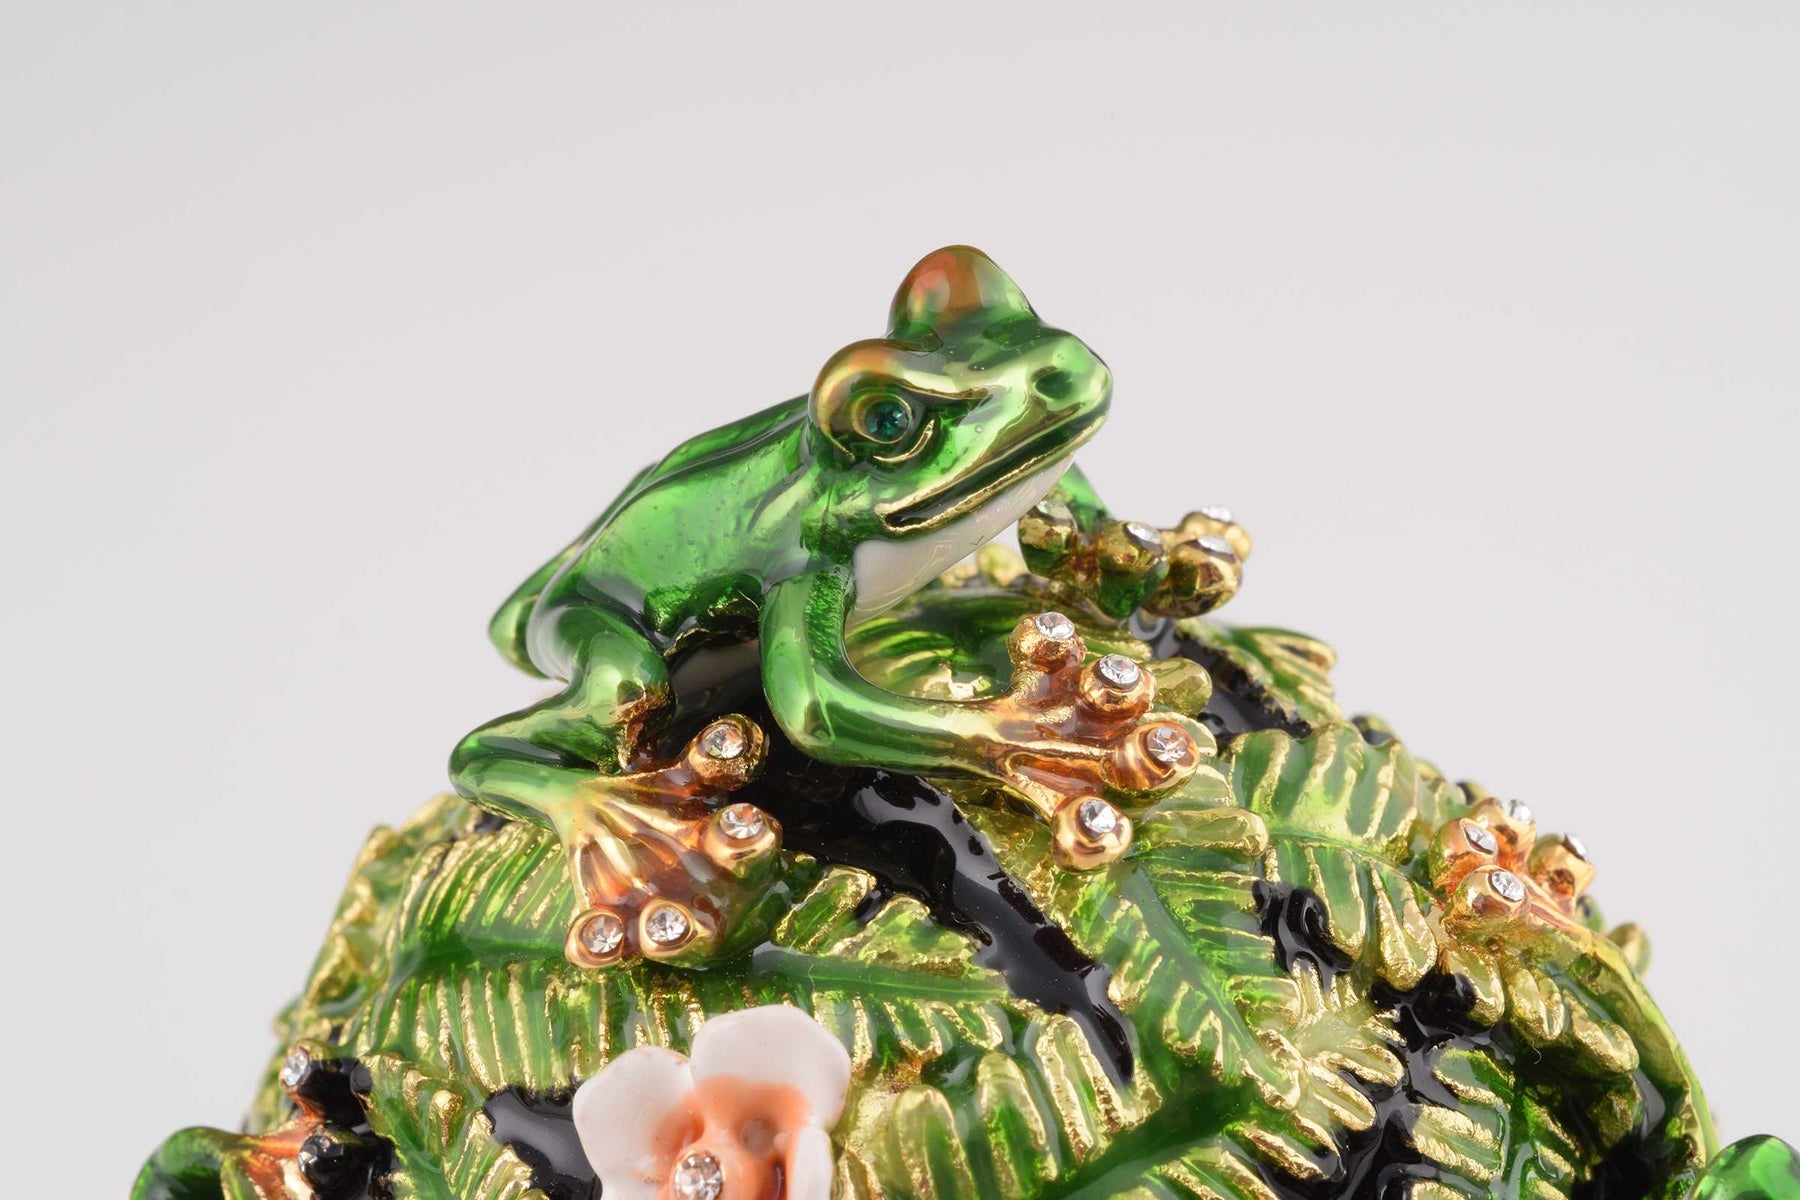 Keren Kopal Green Faberge Egg with Frogs  114.00